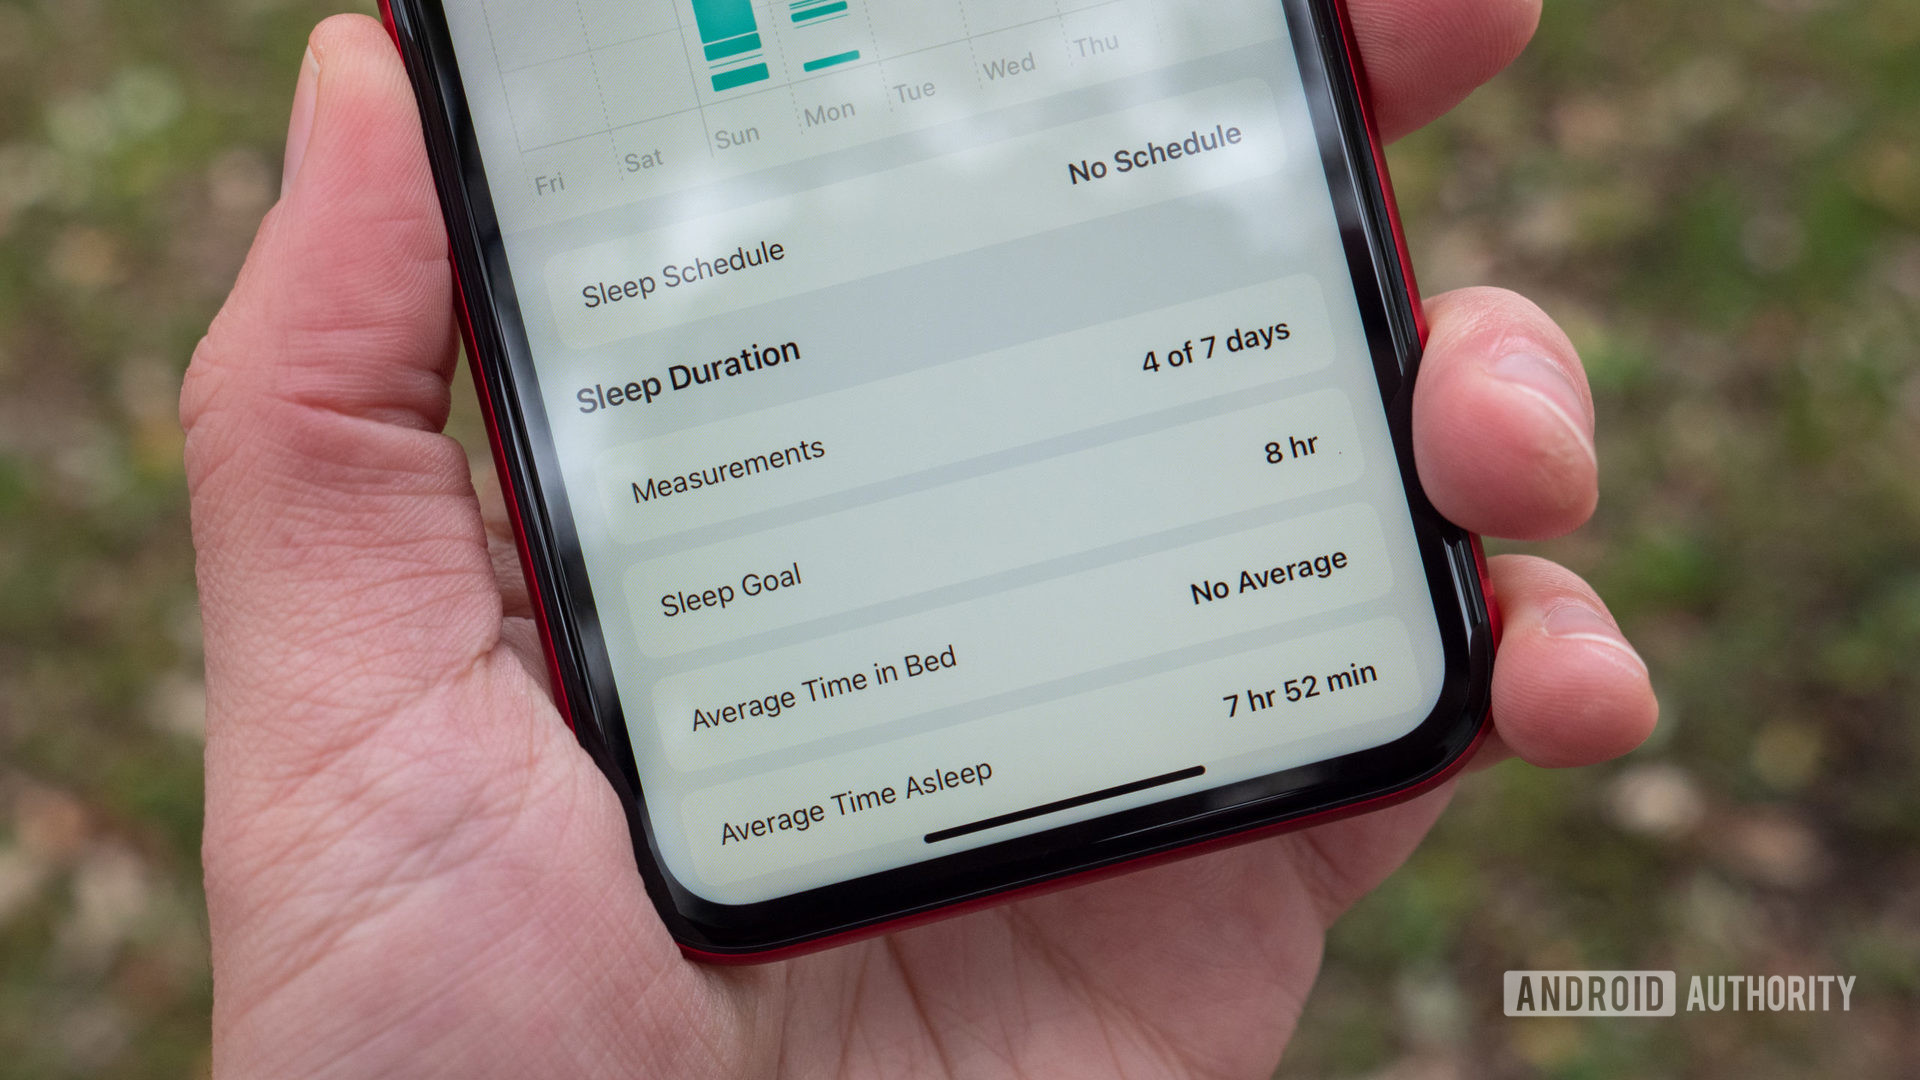 The iPhone 11 Apple Health app showing sleep tracking data